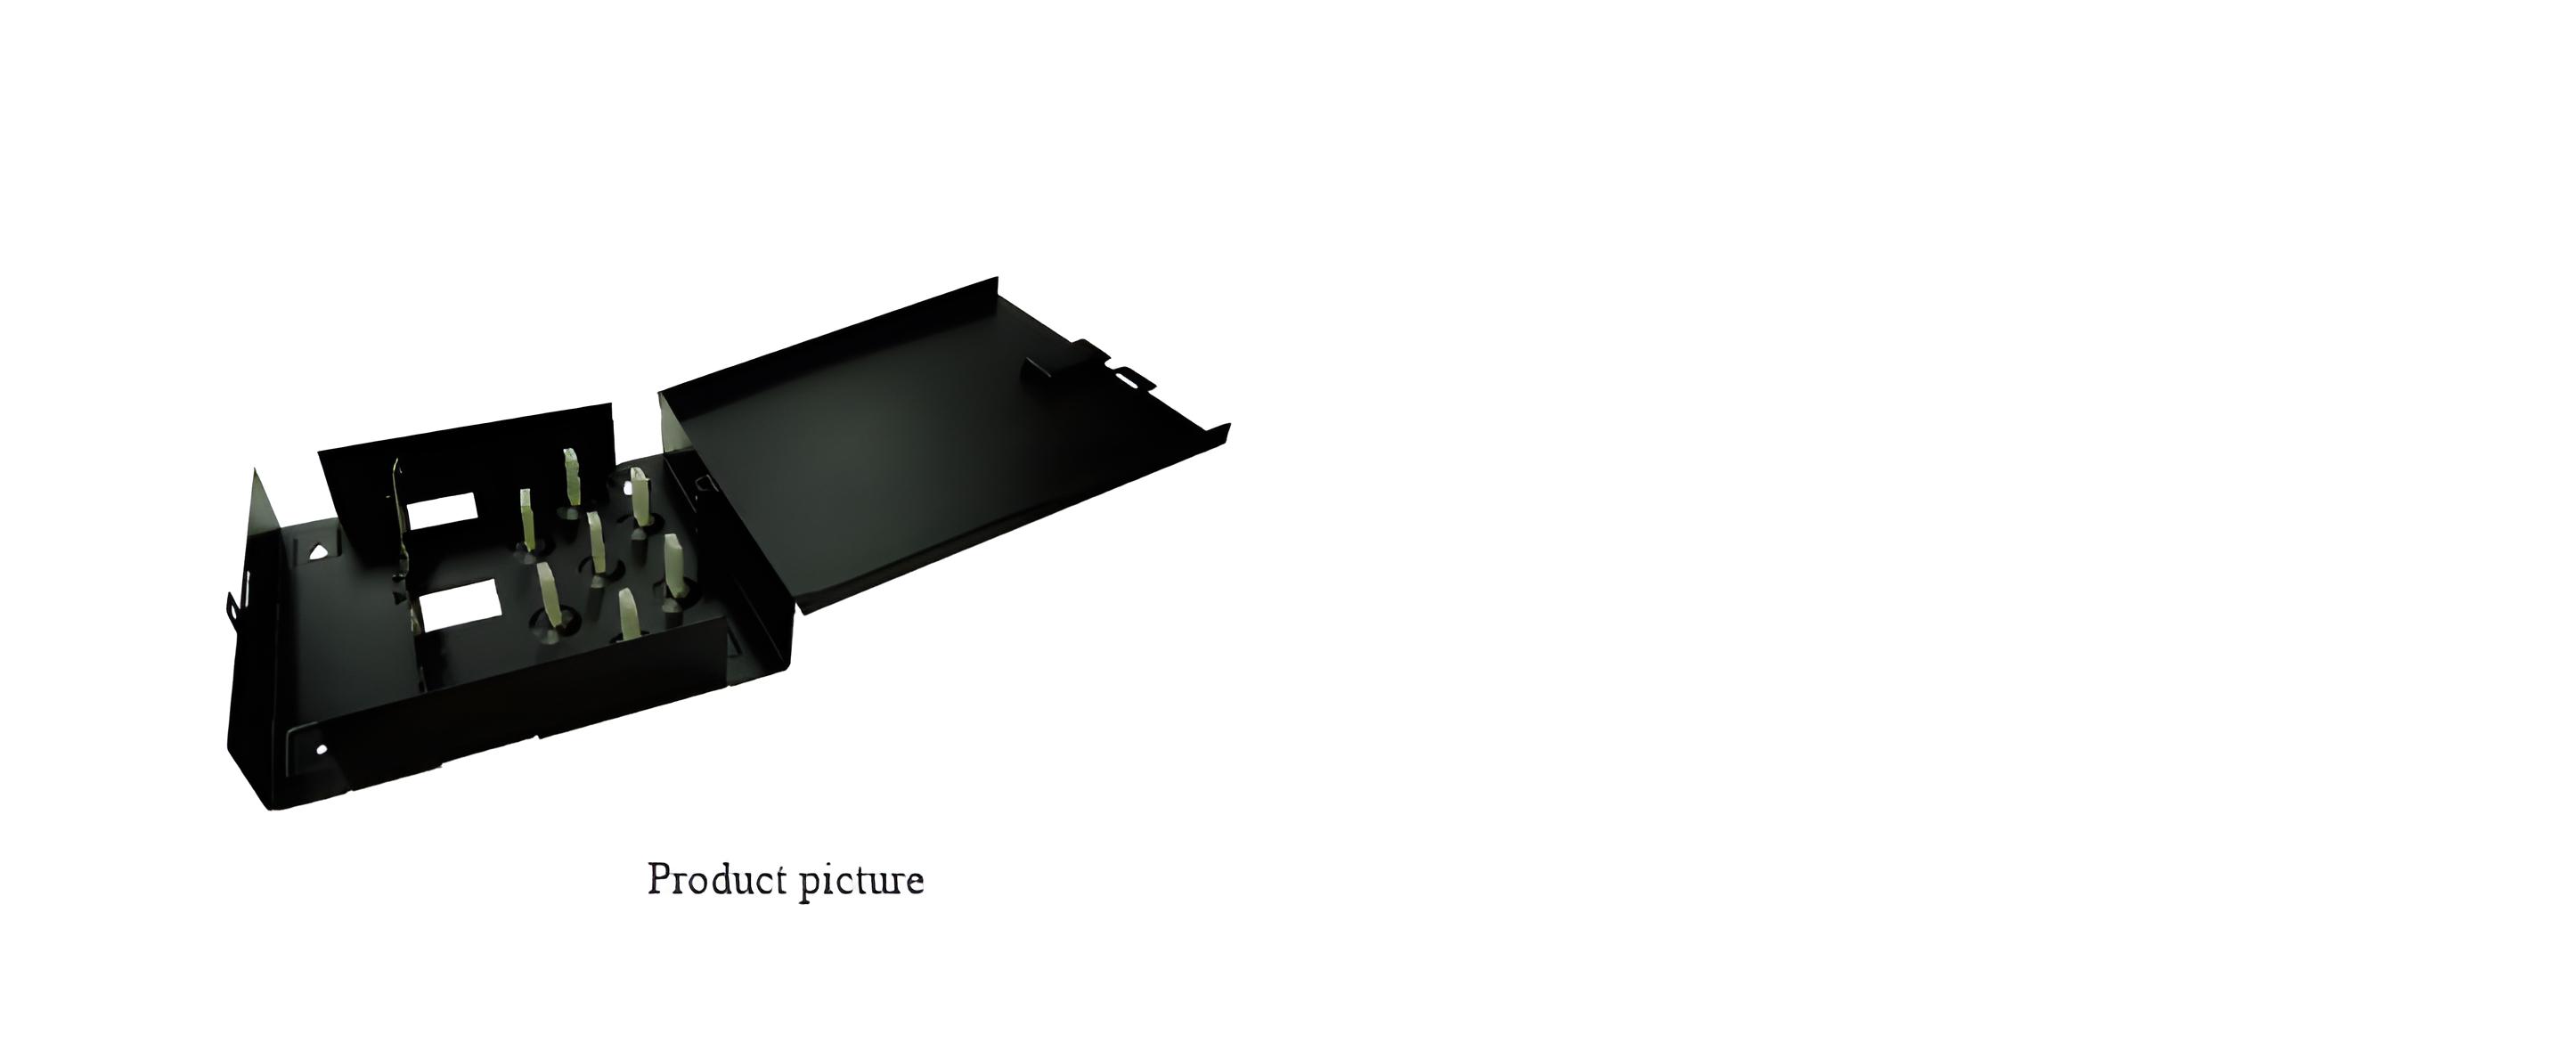 12-port wall mount fiber optical patch panels